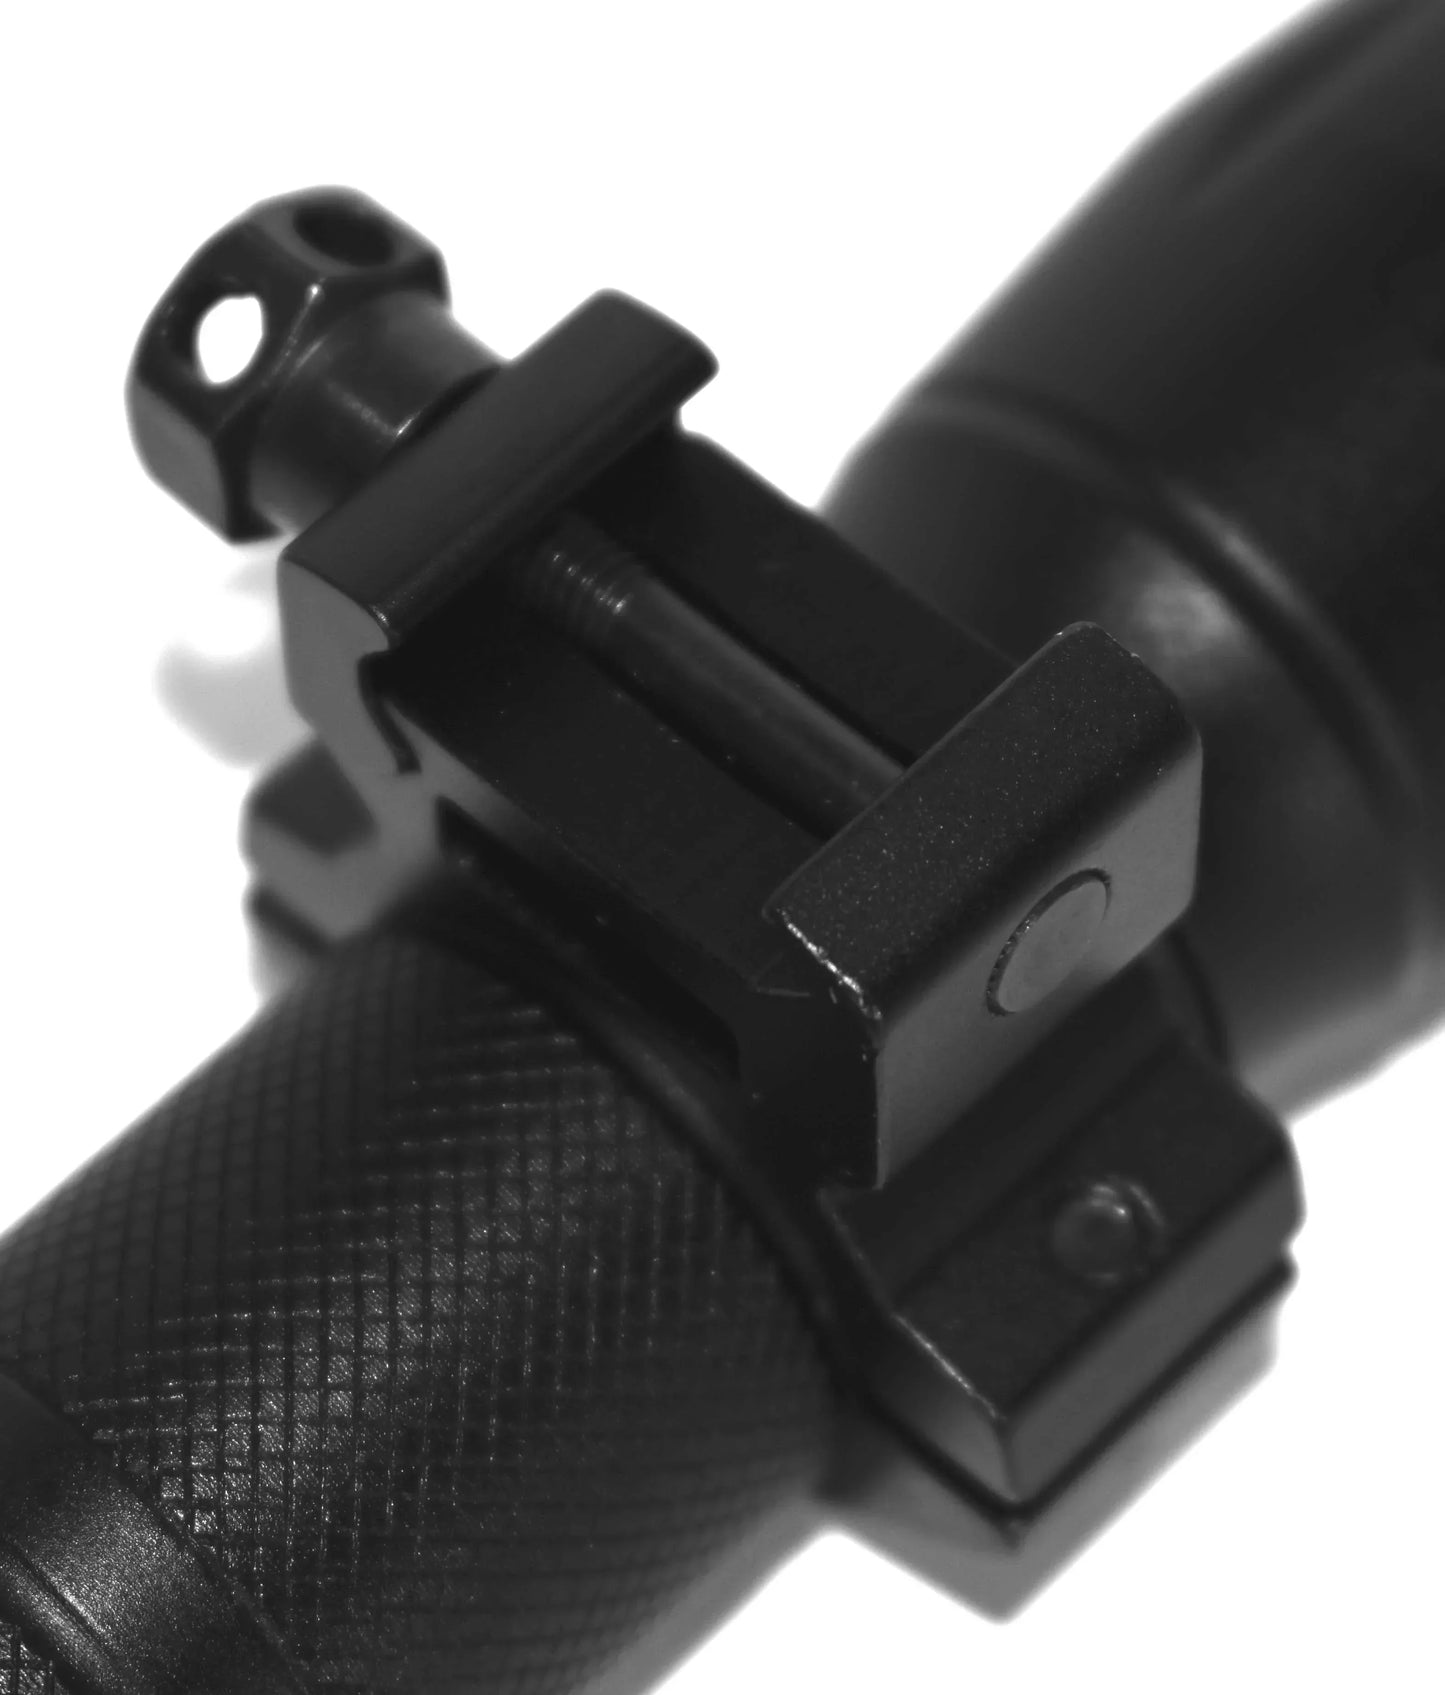 Winchester sxp defender 12 gauge pump flashlight with mount combo aluminum black.